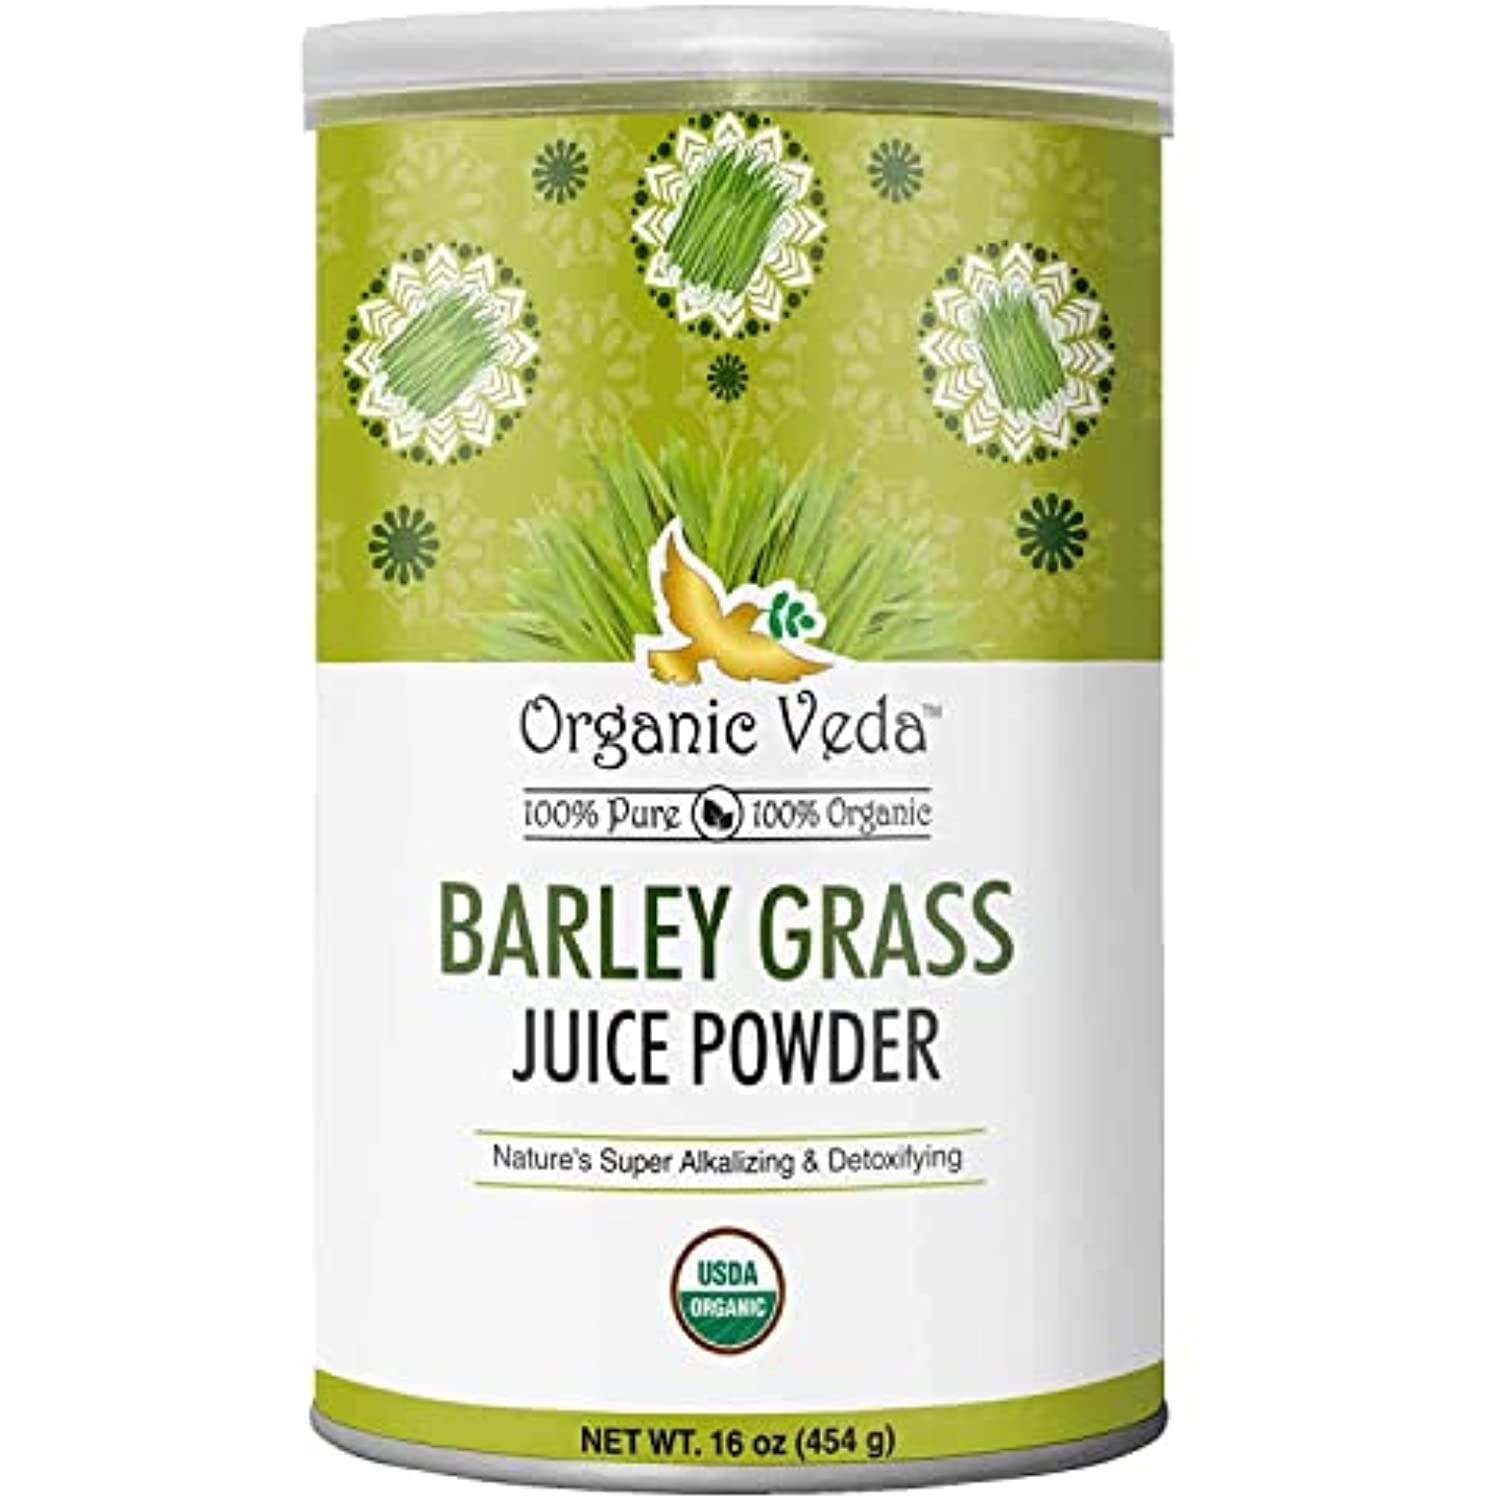 Barley Grass Juice Powder on a white background